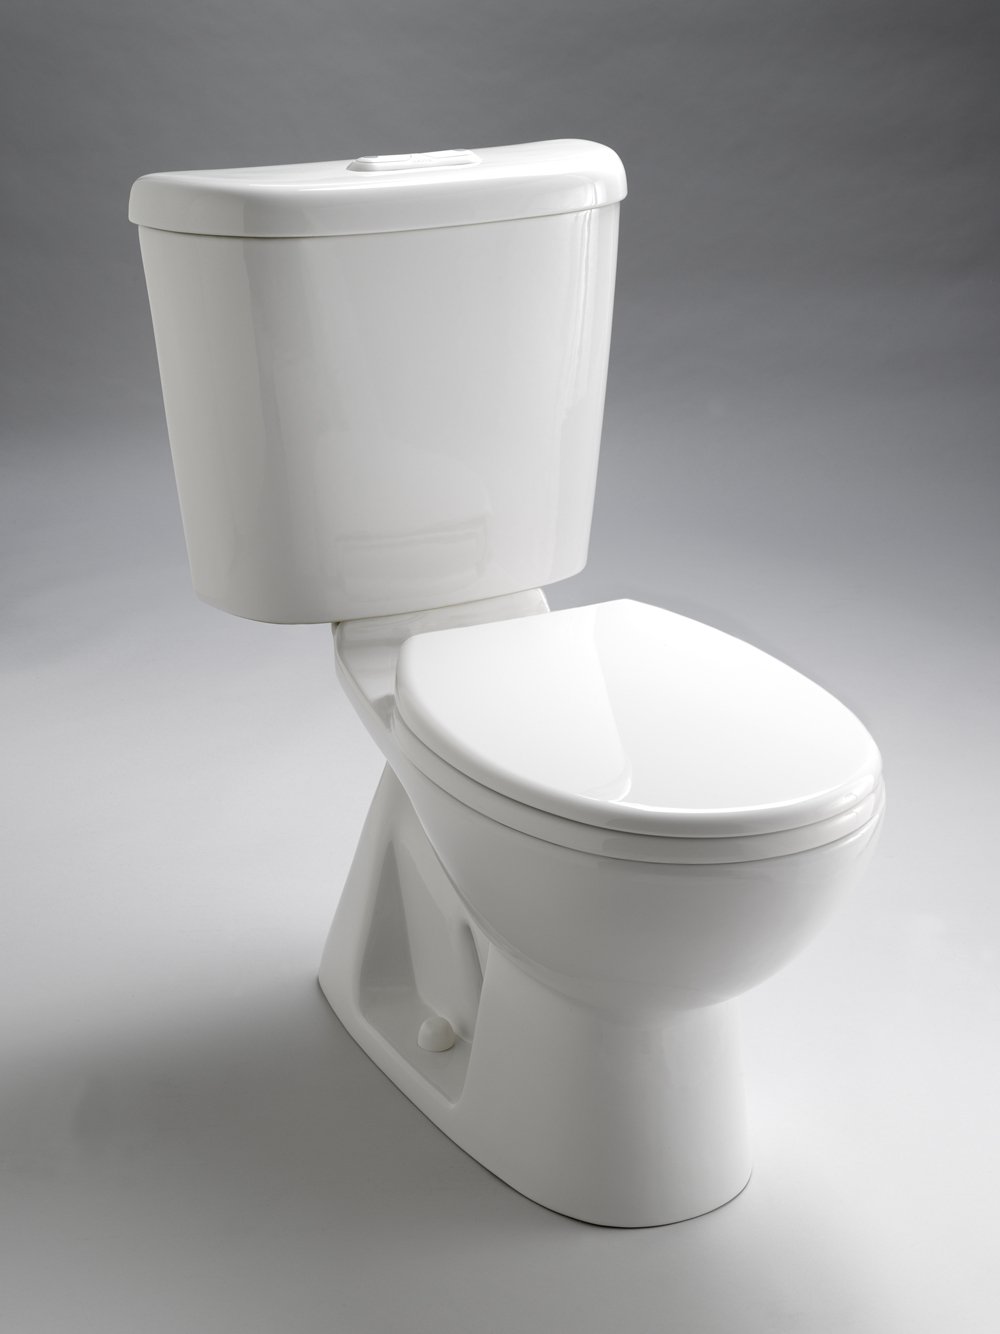 Sydney Smart high efficiency dual flush toilet